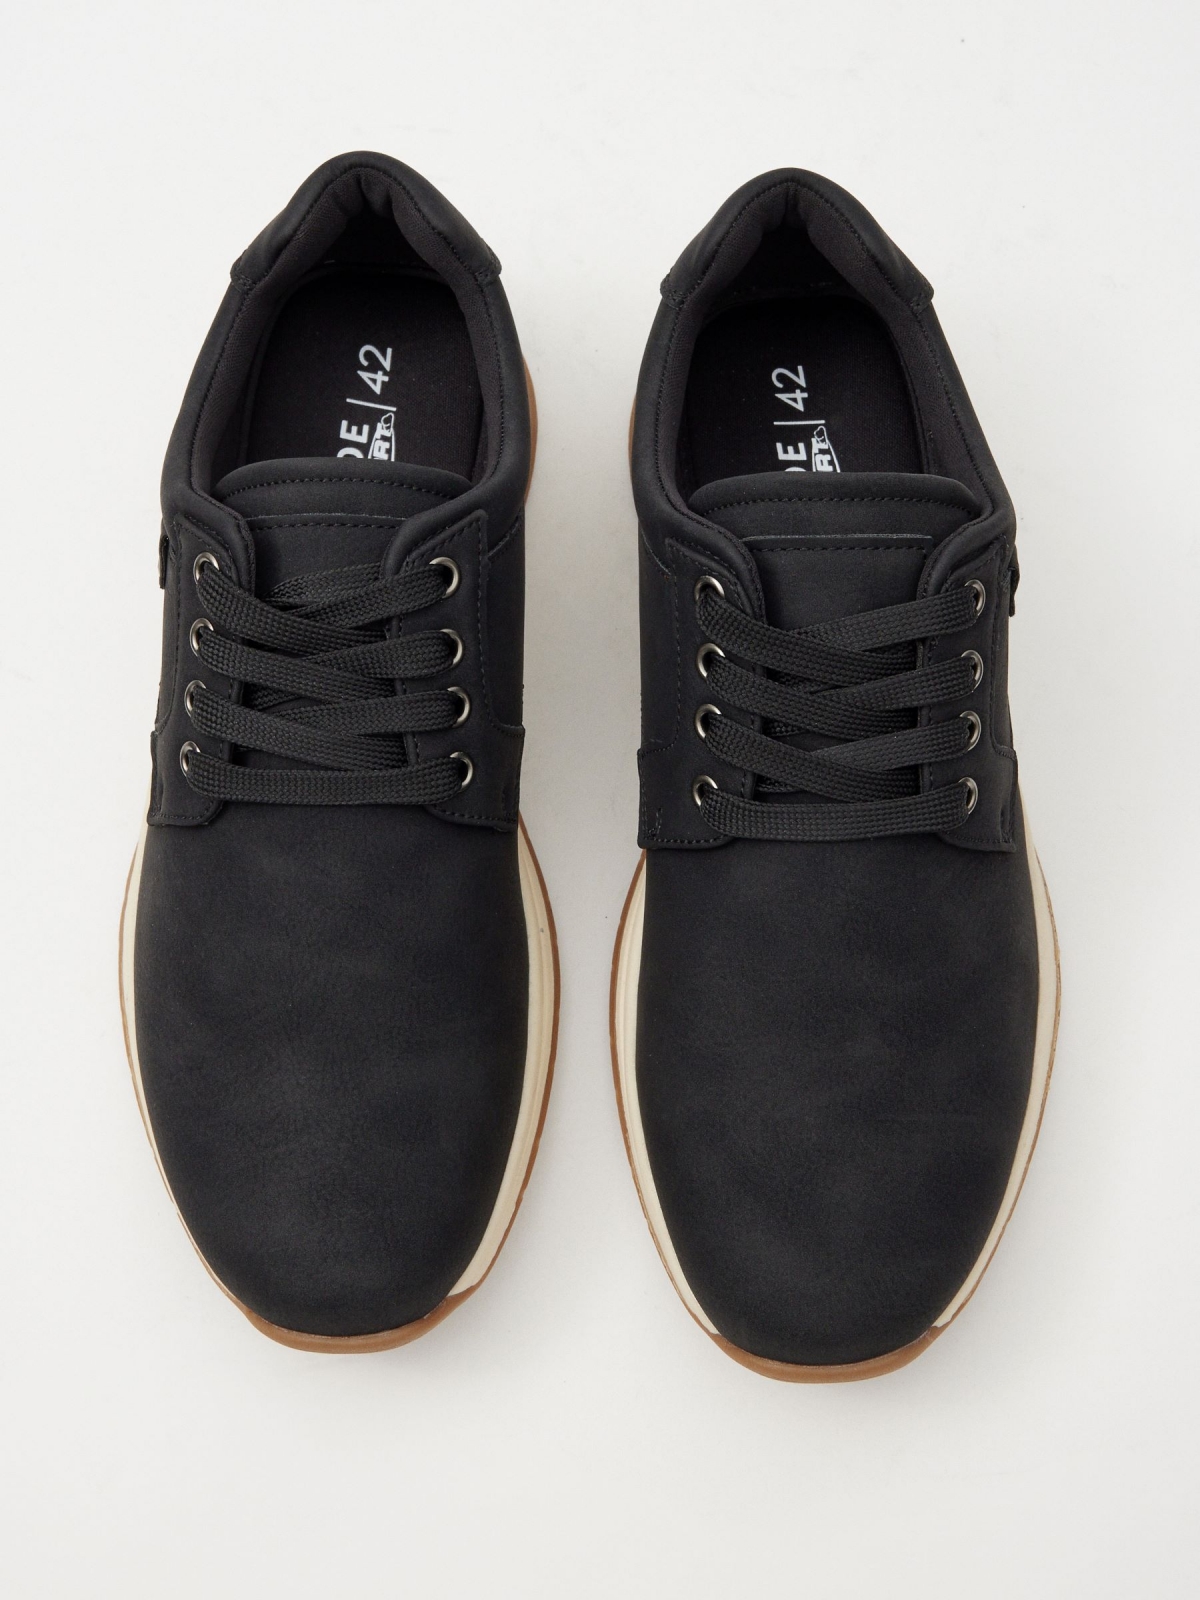 Leatherette casual shoe black zenithal view